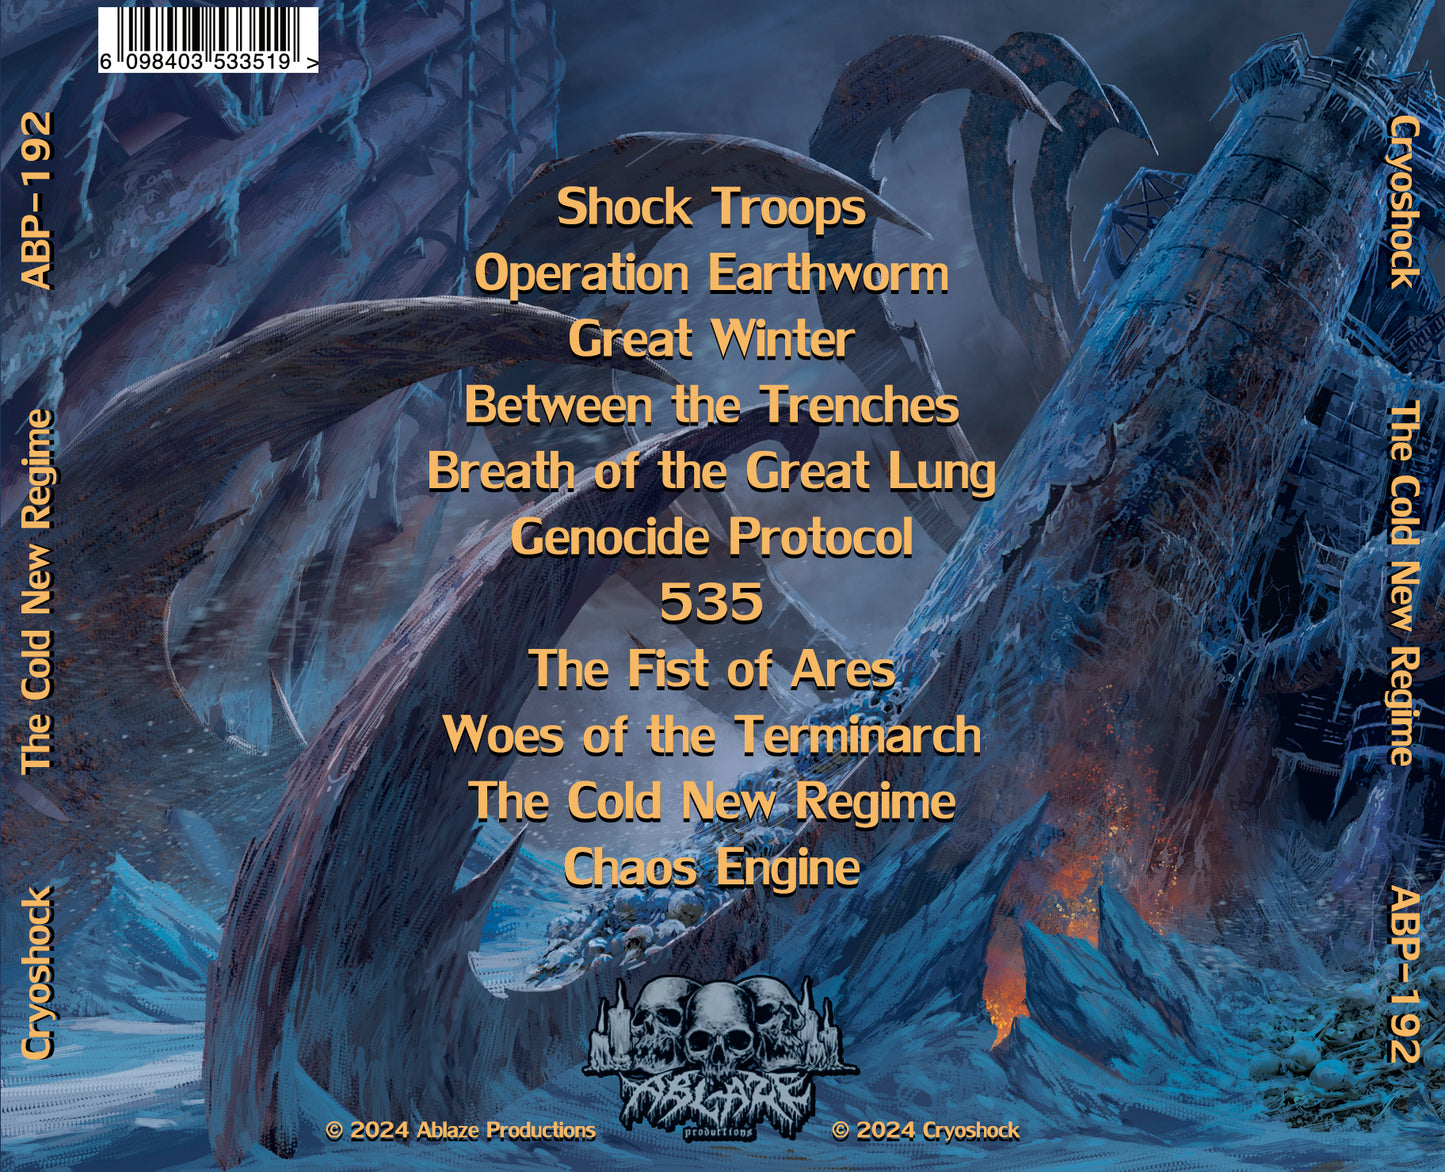 201 - CD - The Cold New Regime (pre-order)